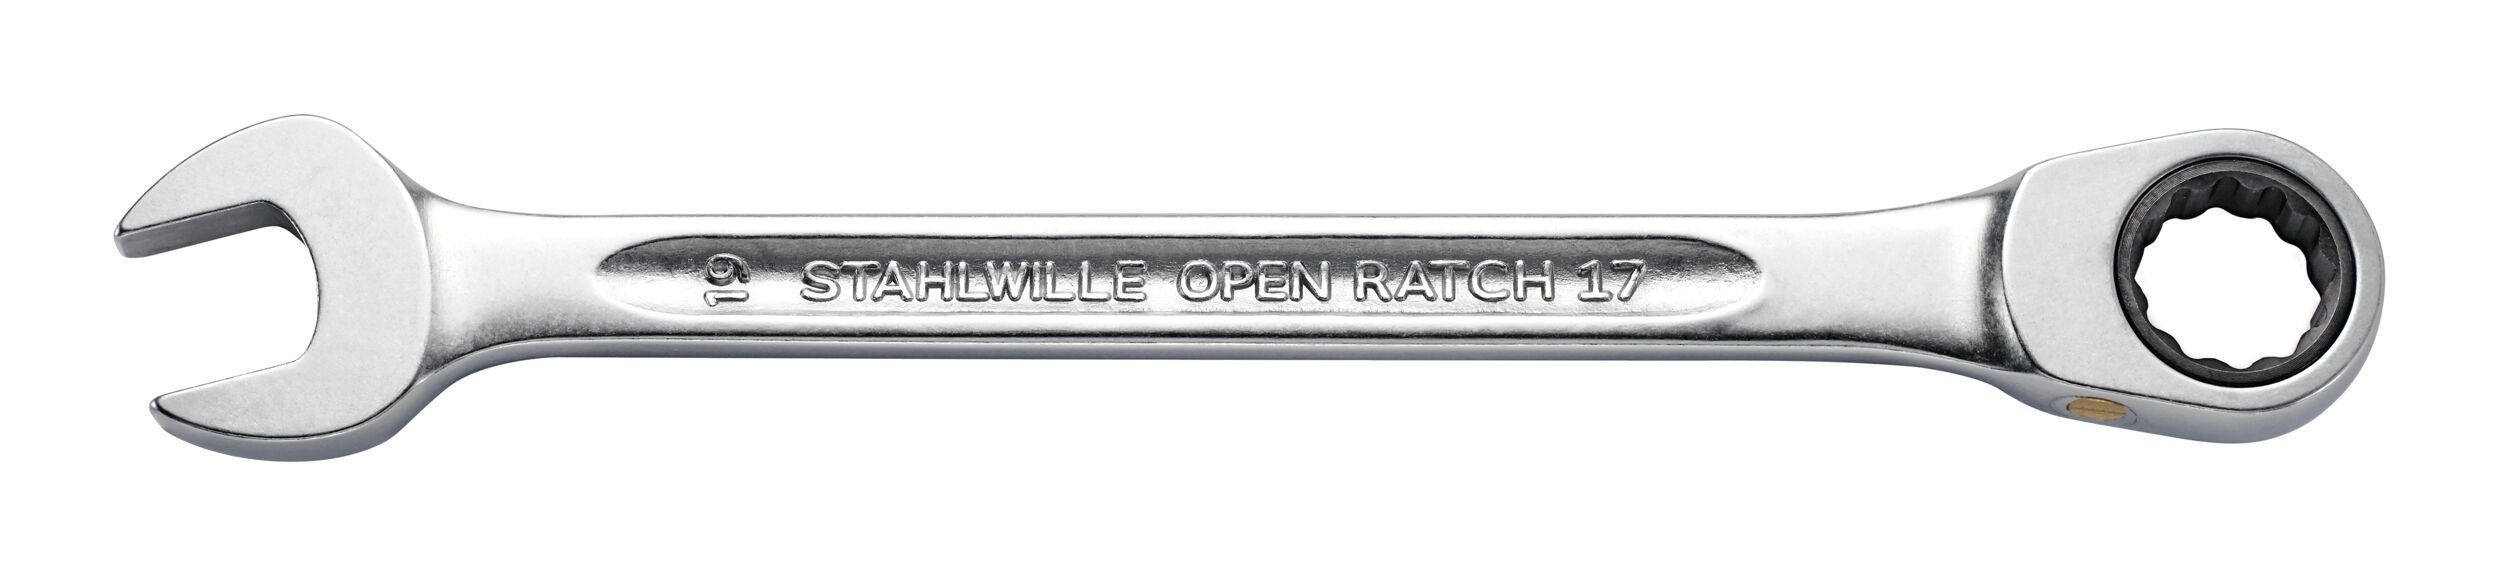 Stahlwille Ratschenringschlüssel, Maul-Ringratschen-Schlüssel gerade 9 mm